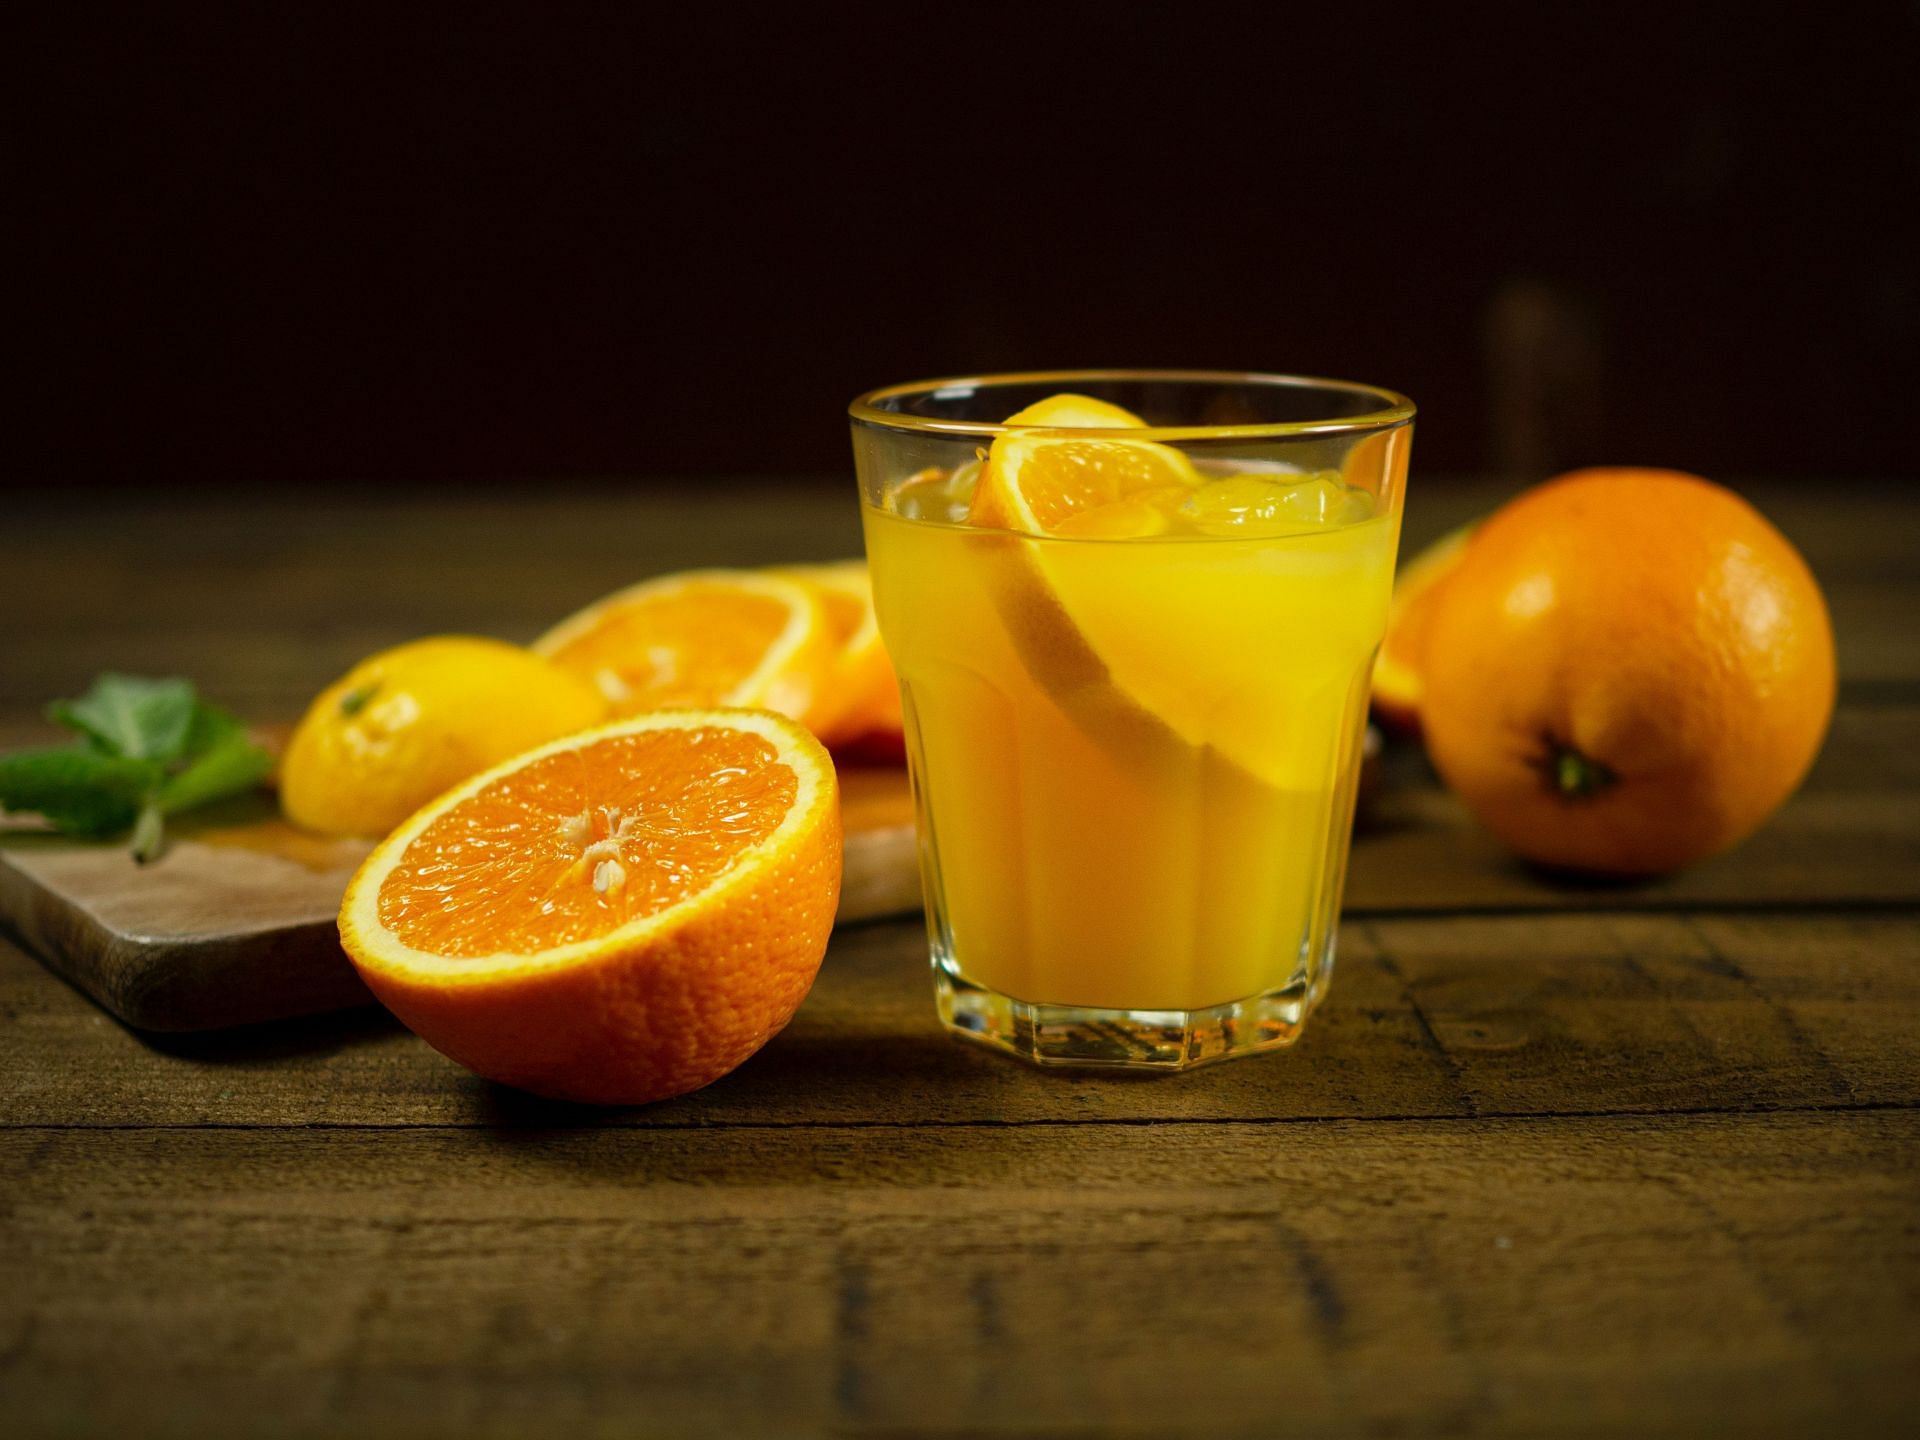 Fermented orange juice is an interesting probiotic drink. (Image via Unsplash/Mateusz Feliksik)